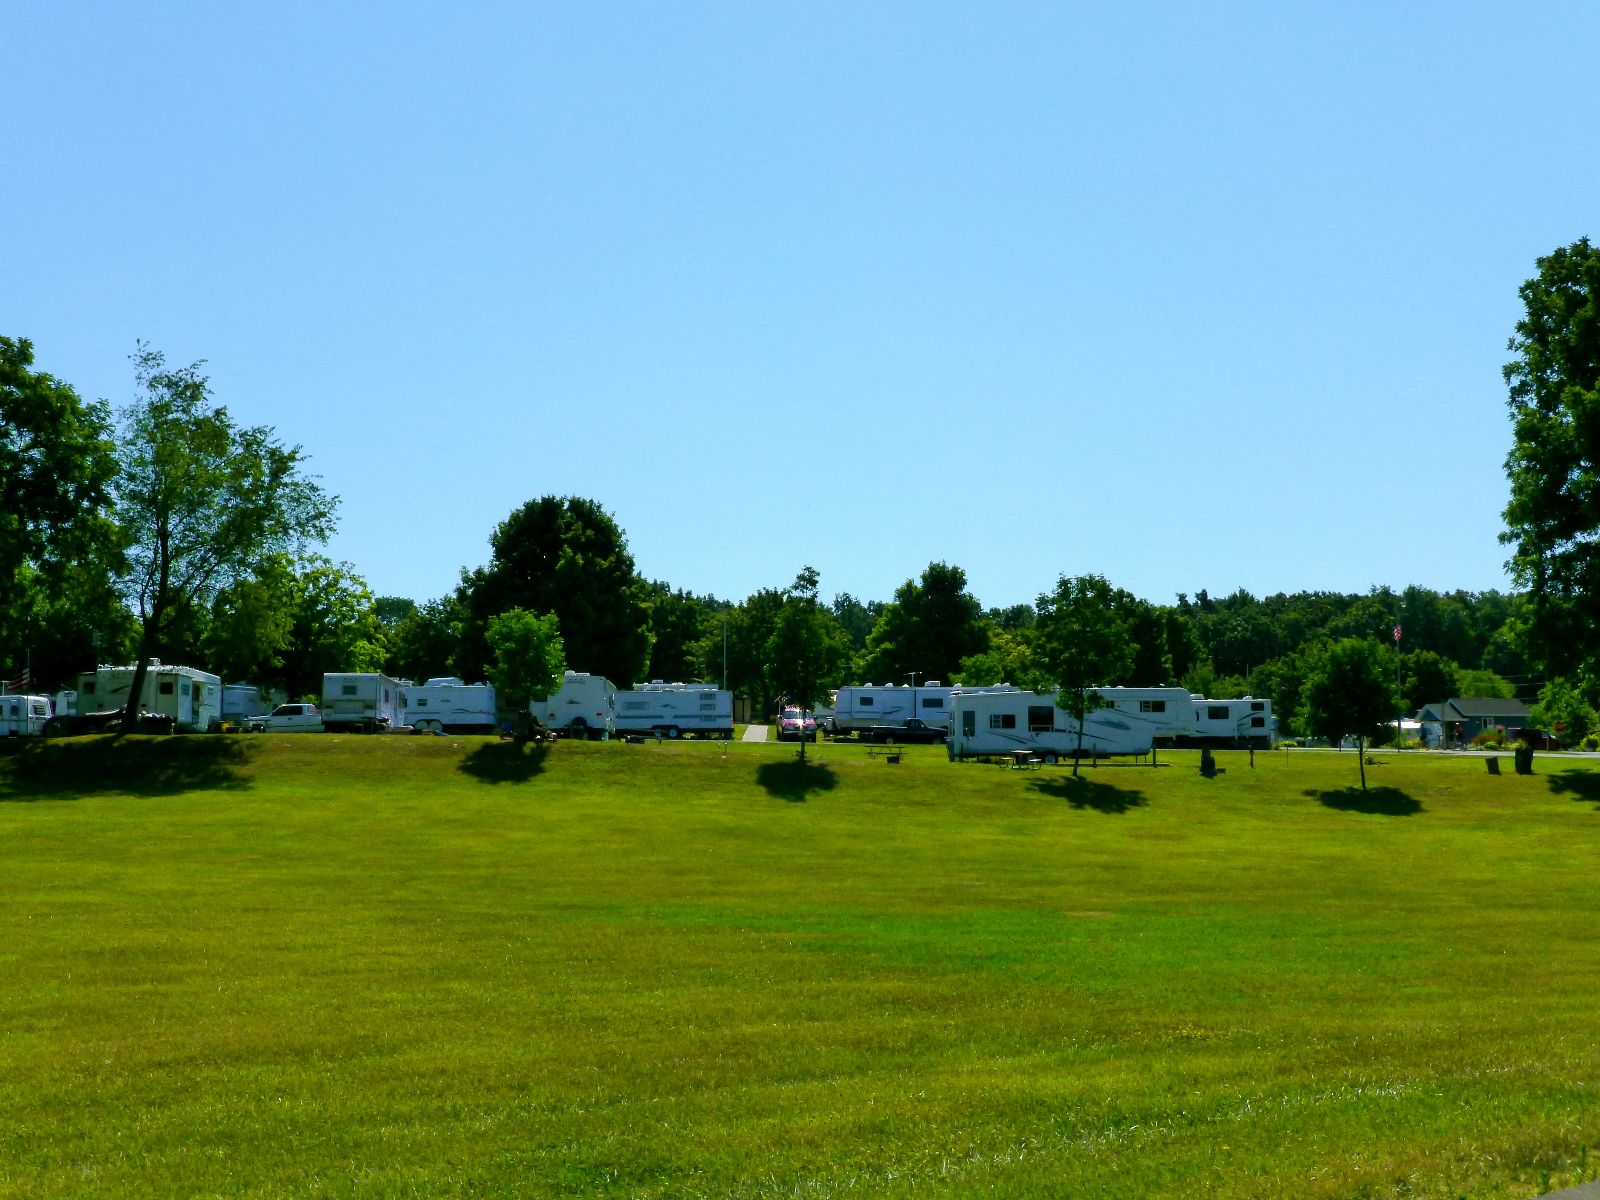 The Camper's Village